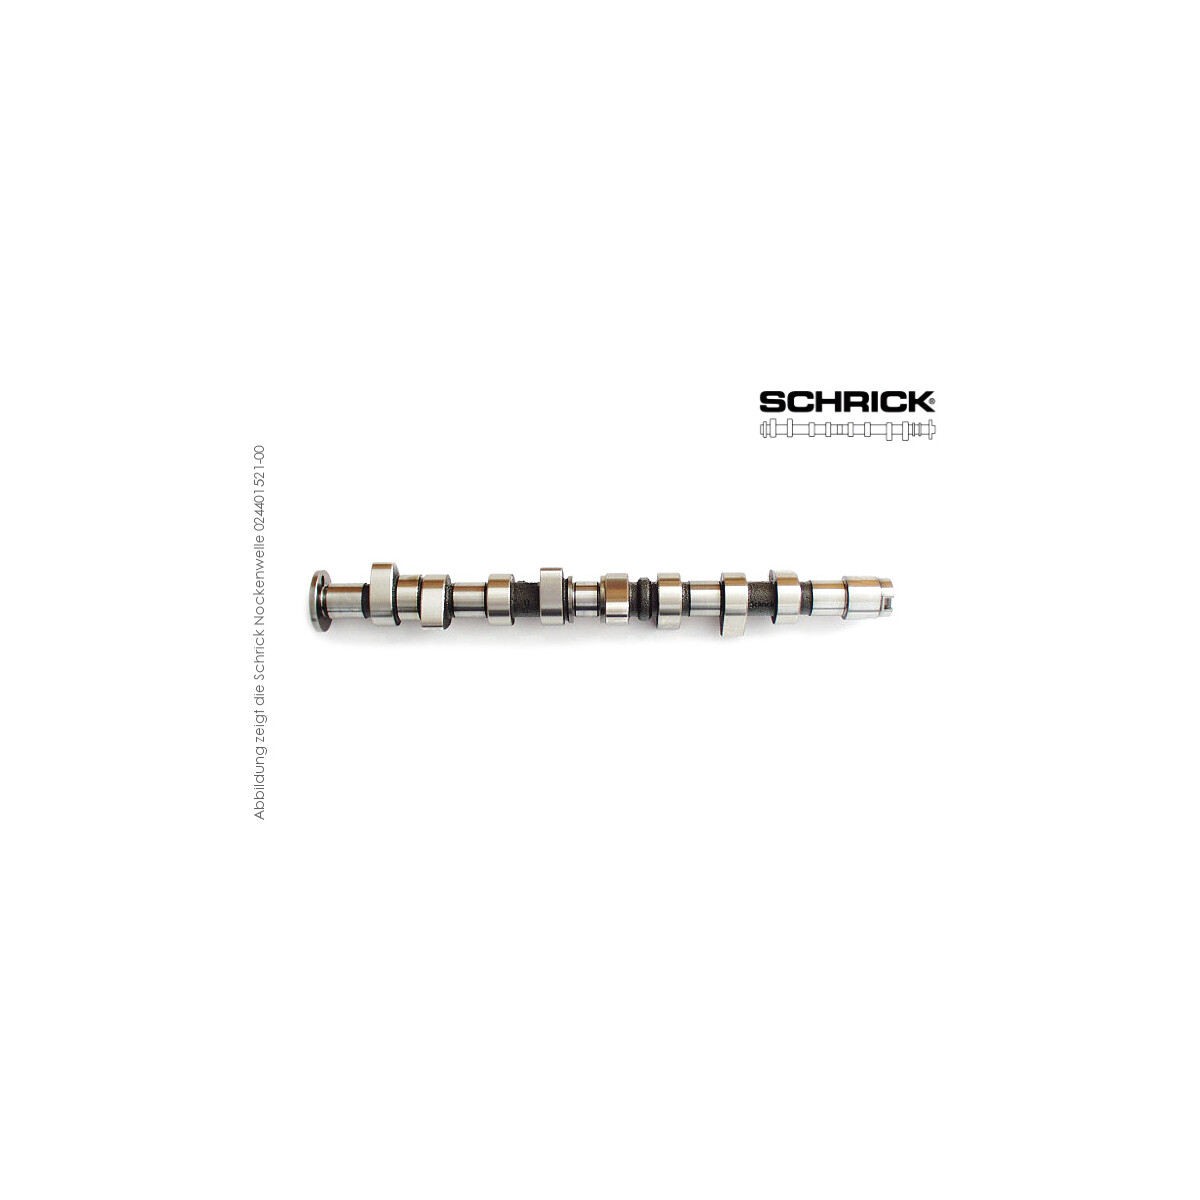 Schrick Nockenwelle für Audi 80, 90 | 1,8-2,0L 16V 4-Zyl. , 16V | 260° Einlassnockenwelle (Schrick 0220E1601-02)